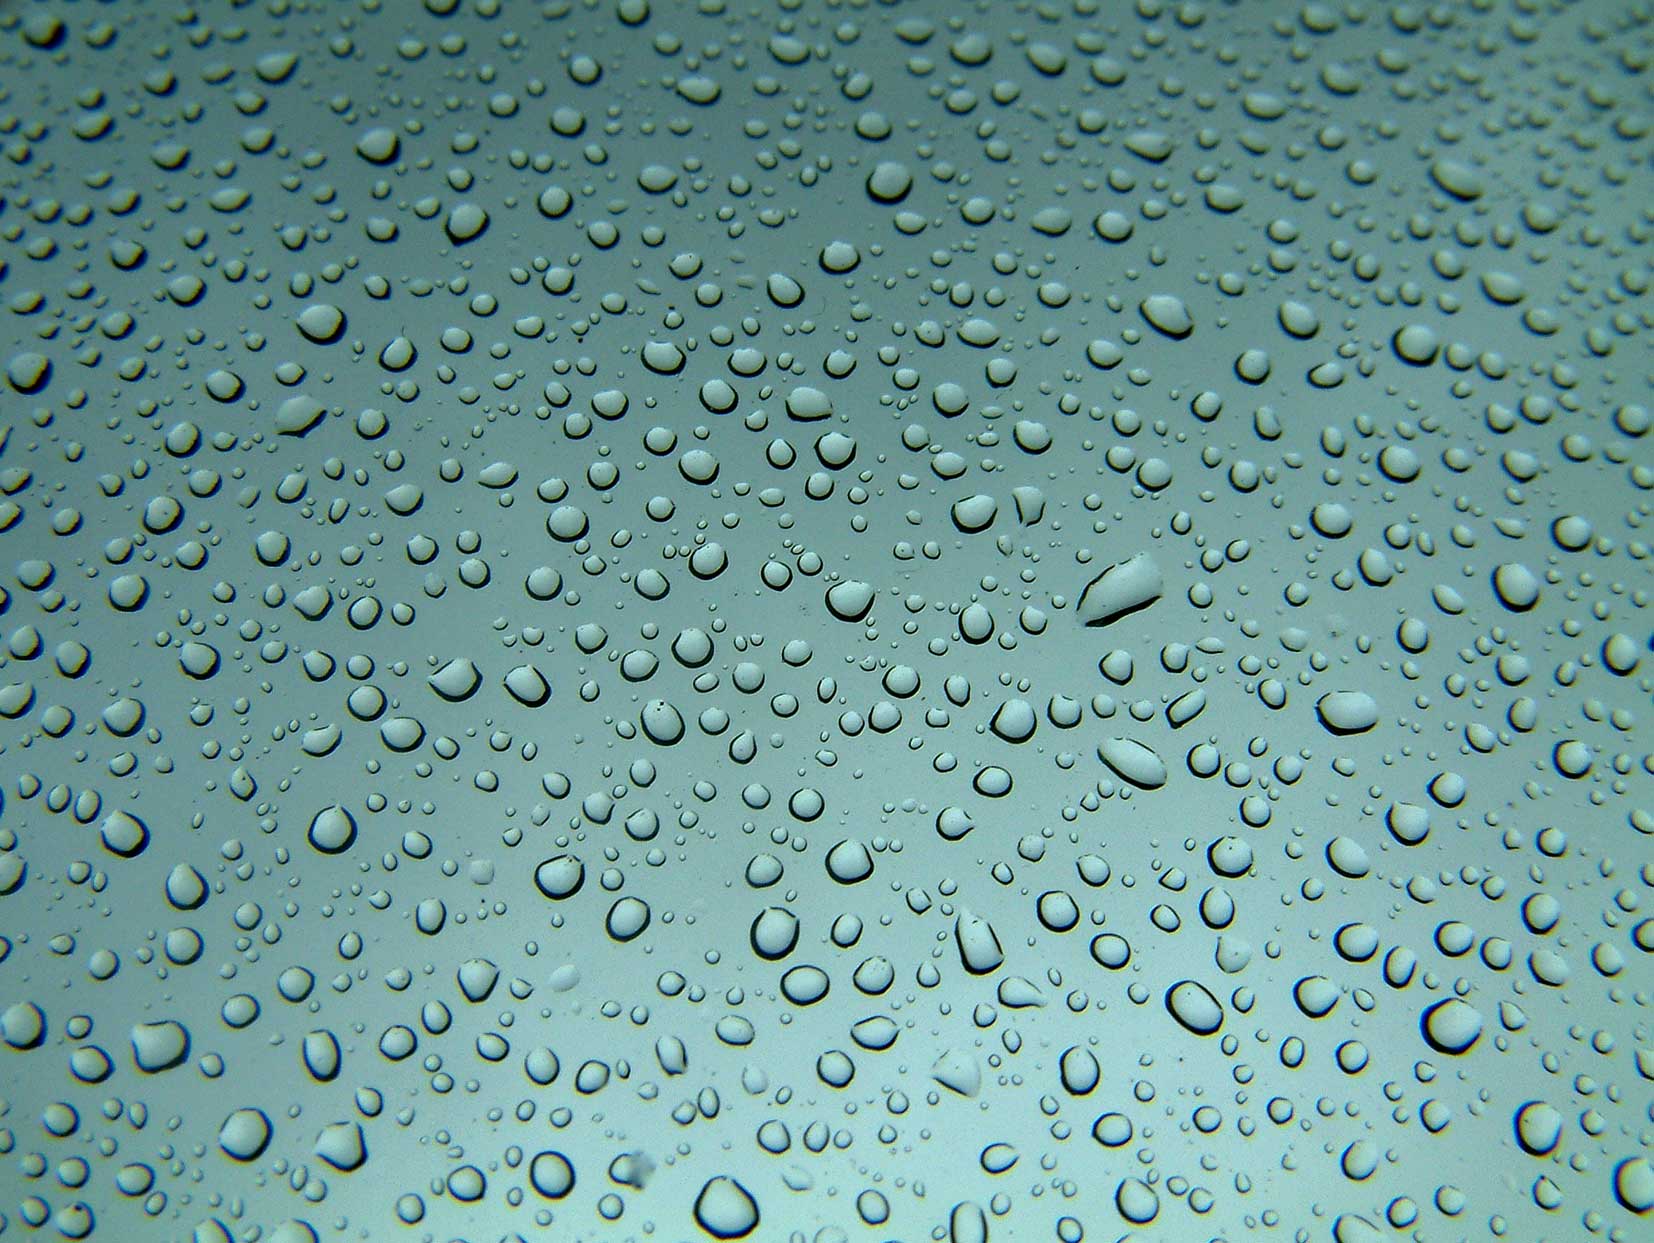 Texture - Water Drop by eRiQ on DeviantArt